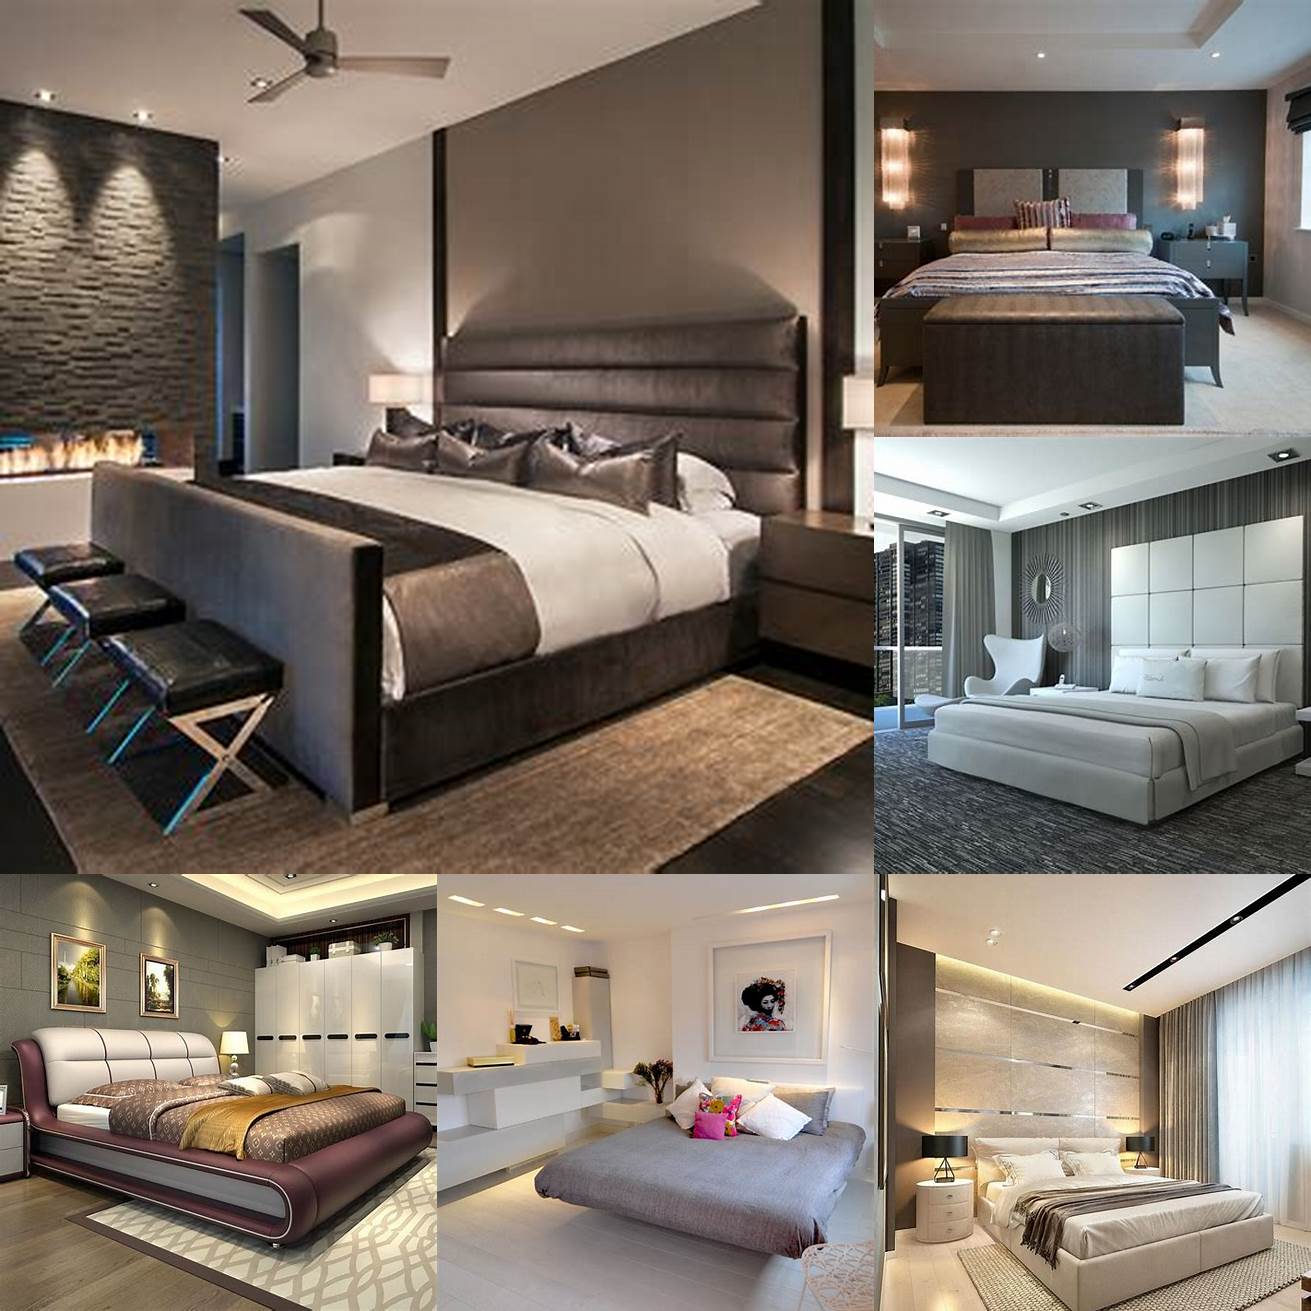 The beds sleek and modern design